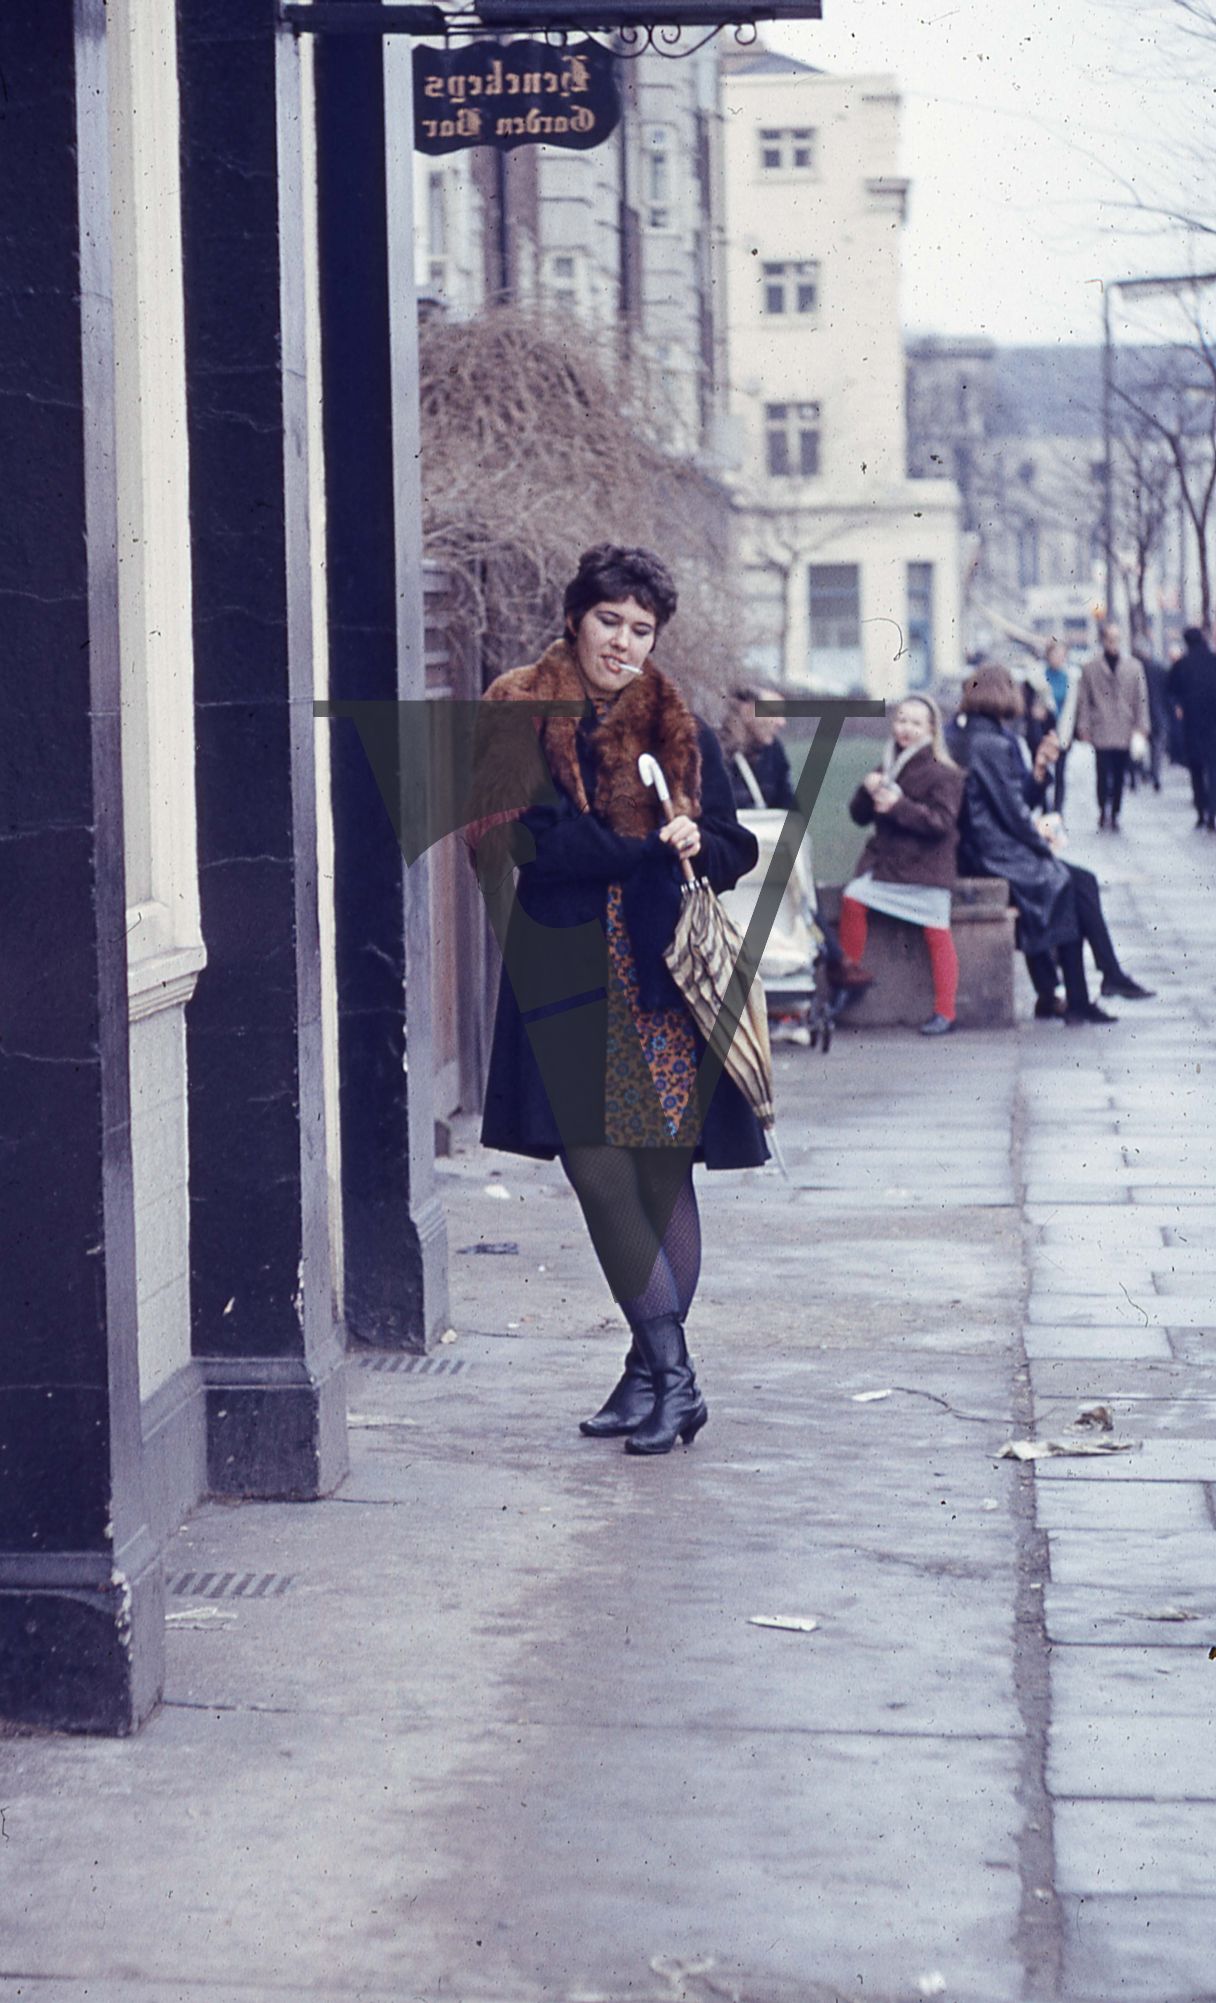 London, Sixties, street scenes, Portobello Road market.